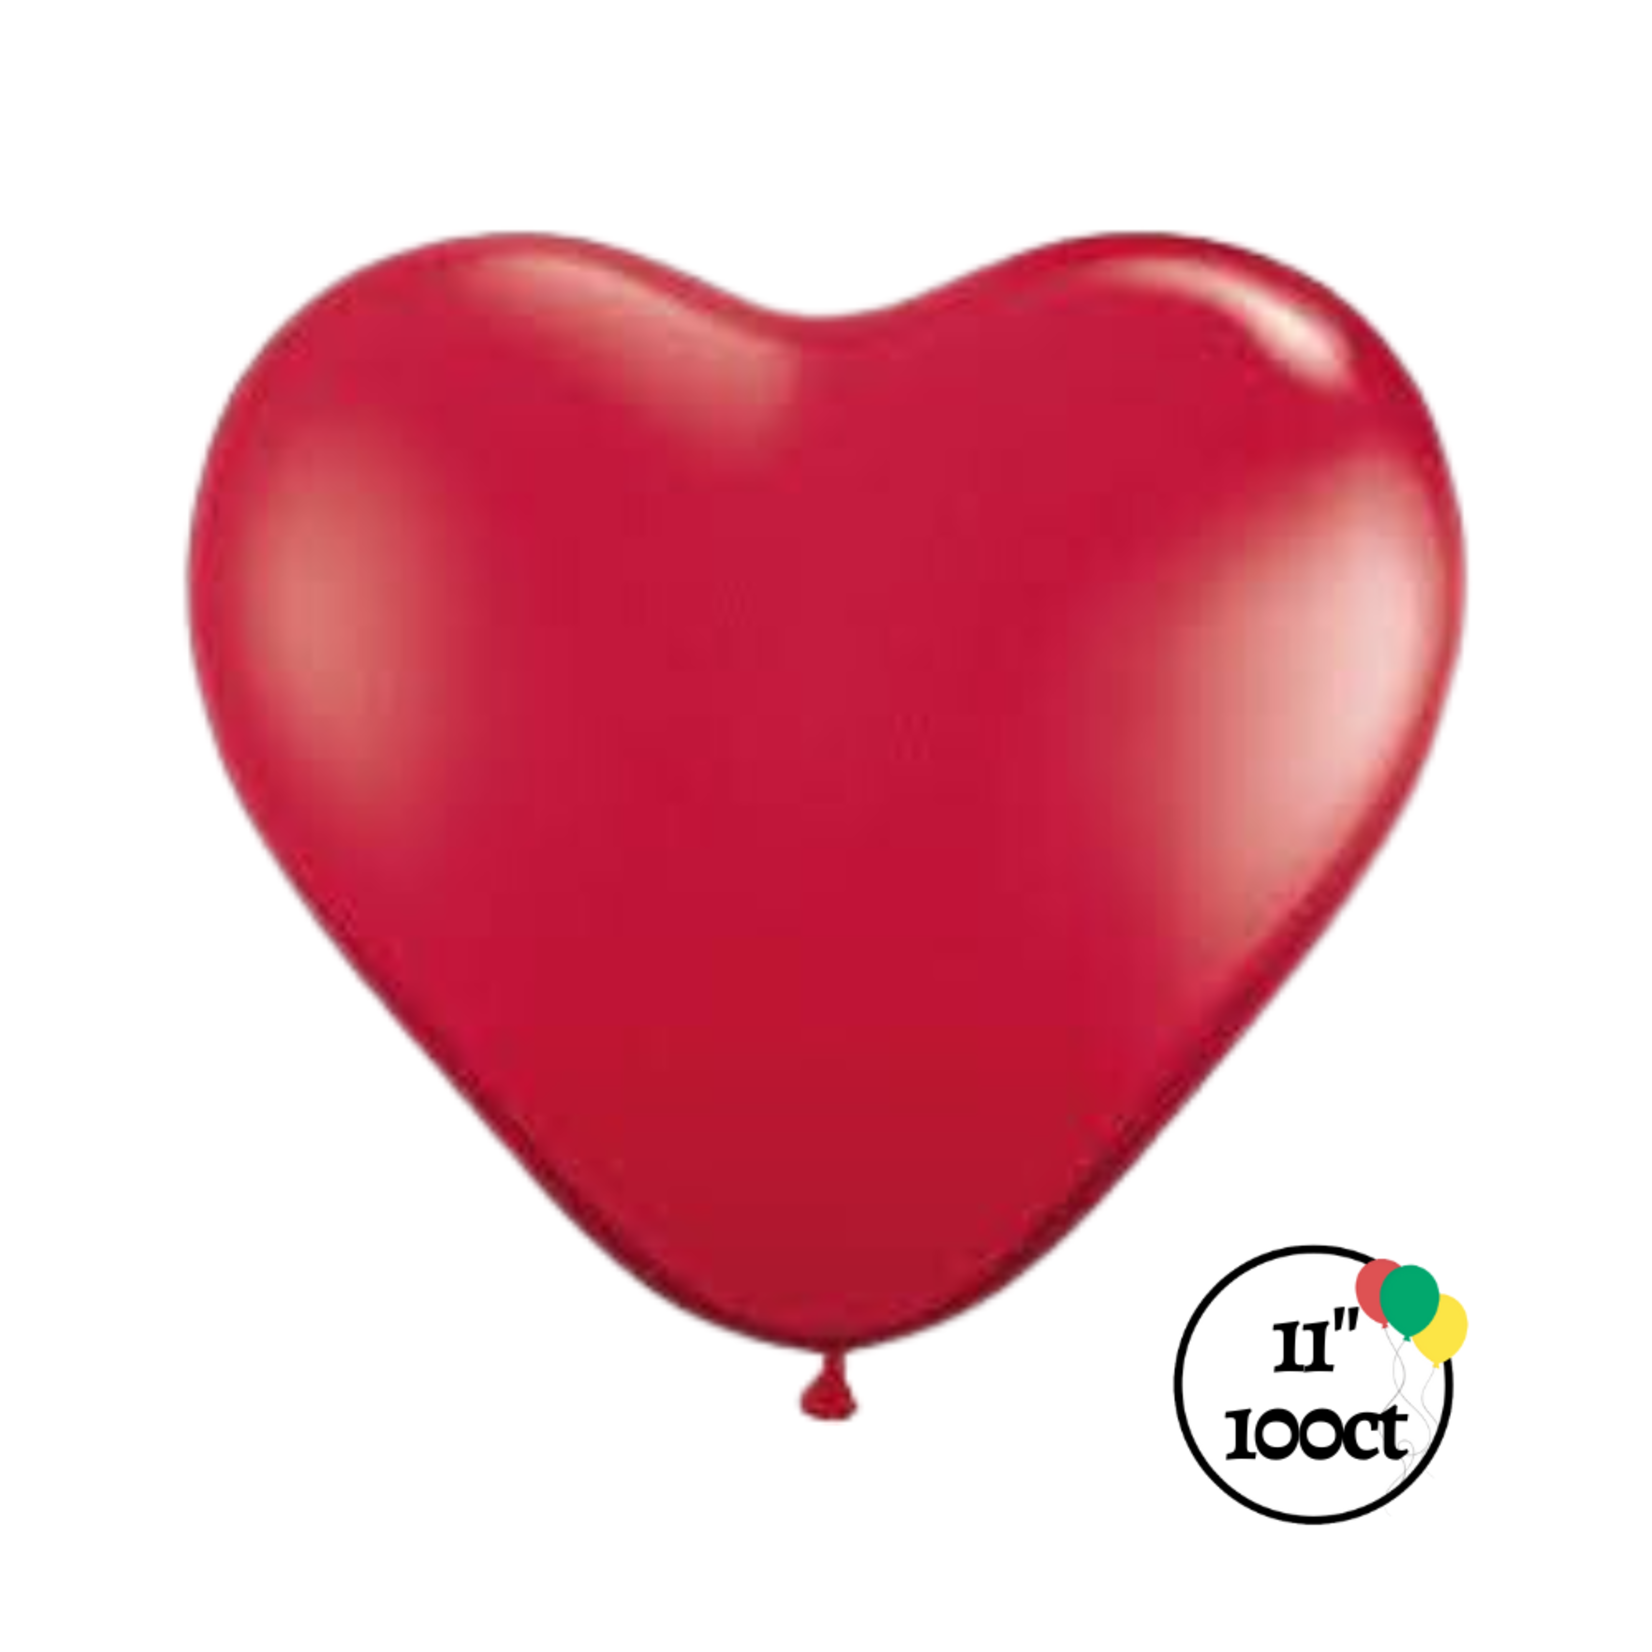 Qualatex Qualatex Ruby Red Heart Balloon 11" 100ct